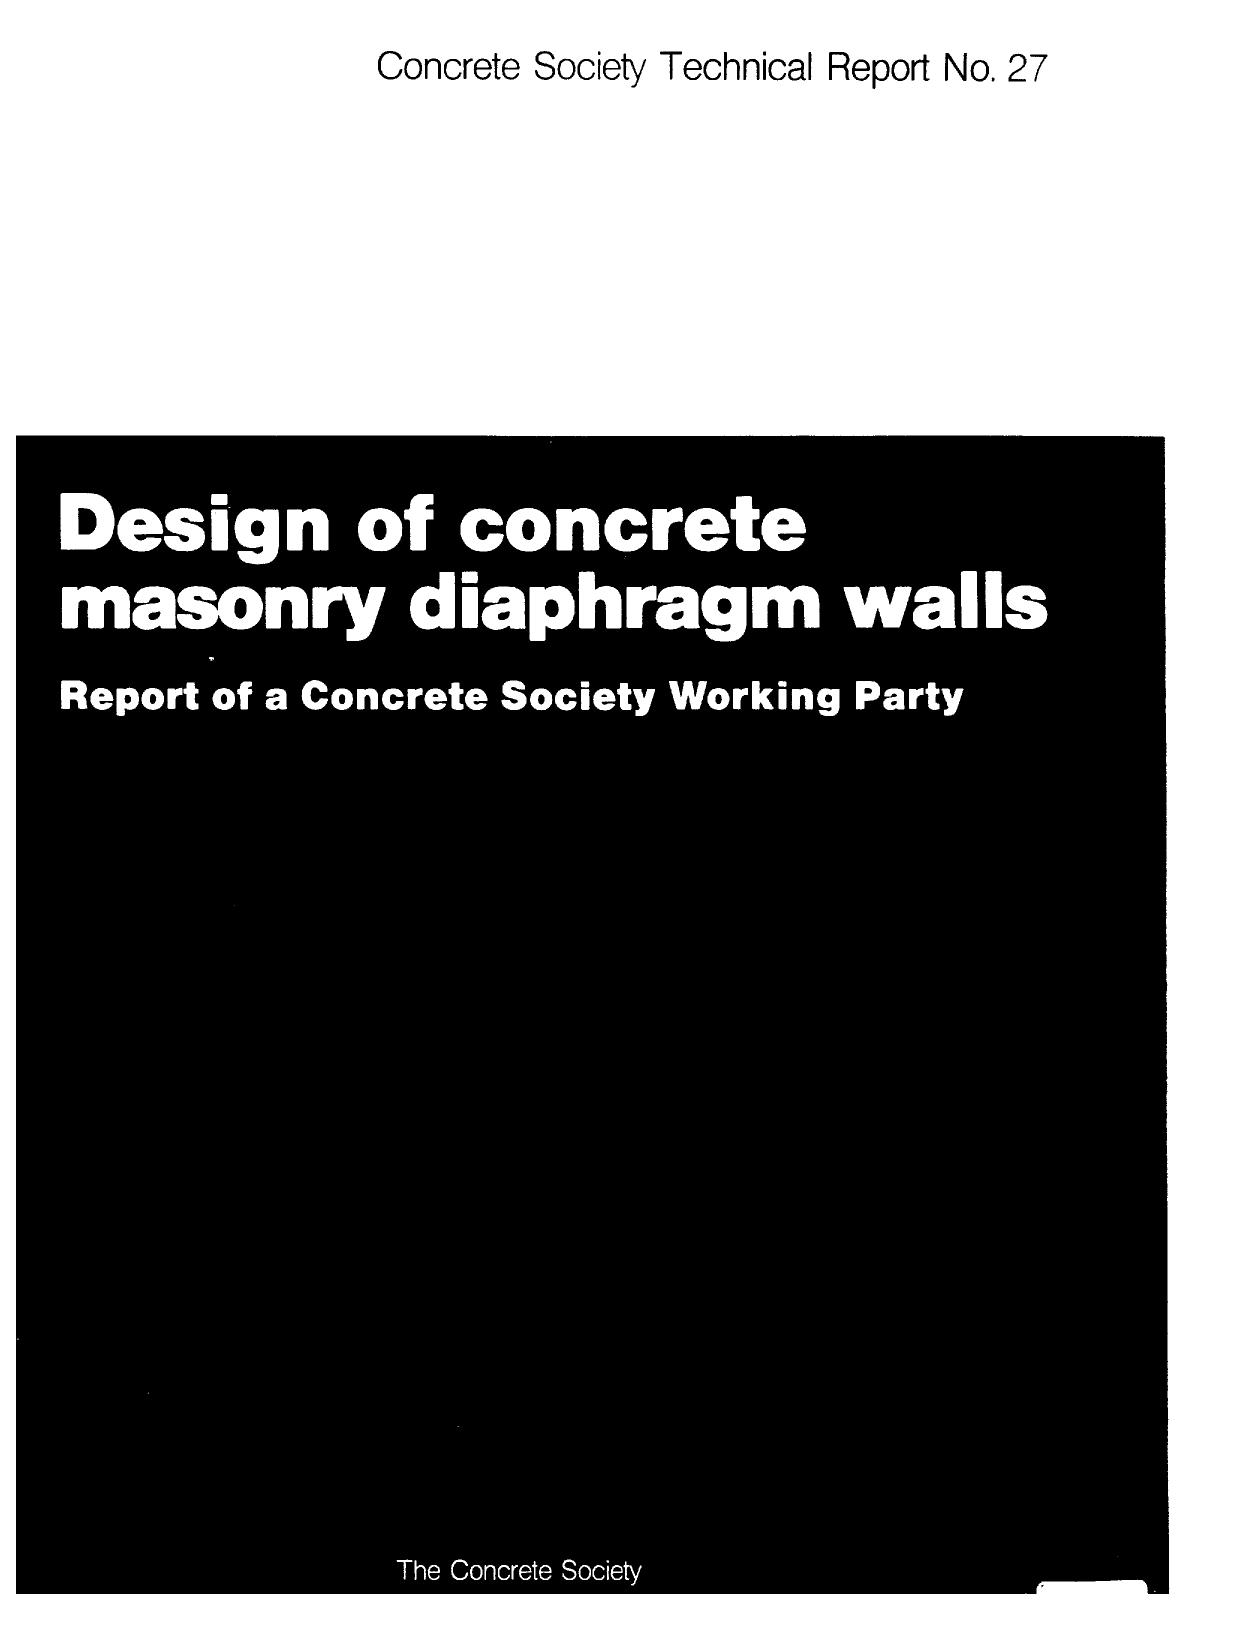 Design of concrete masonry diaphragm walls